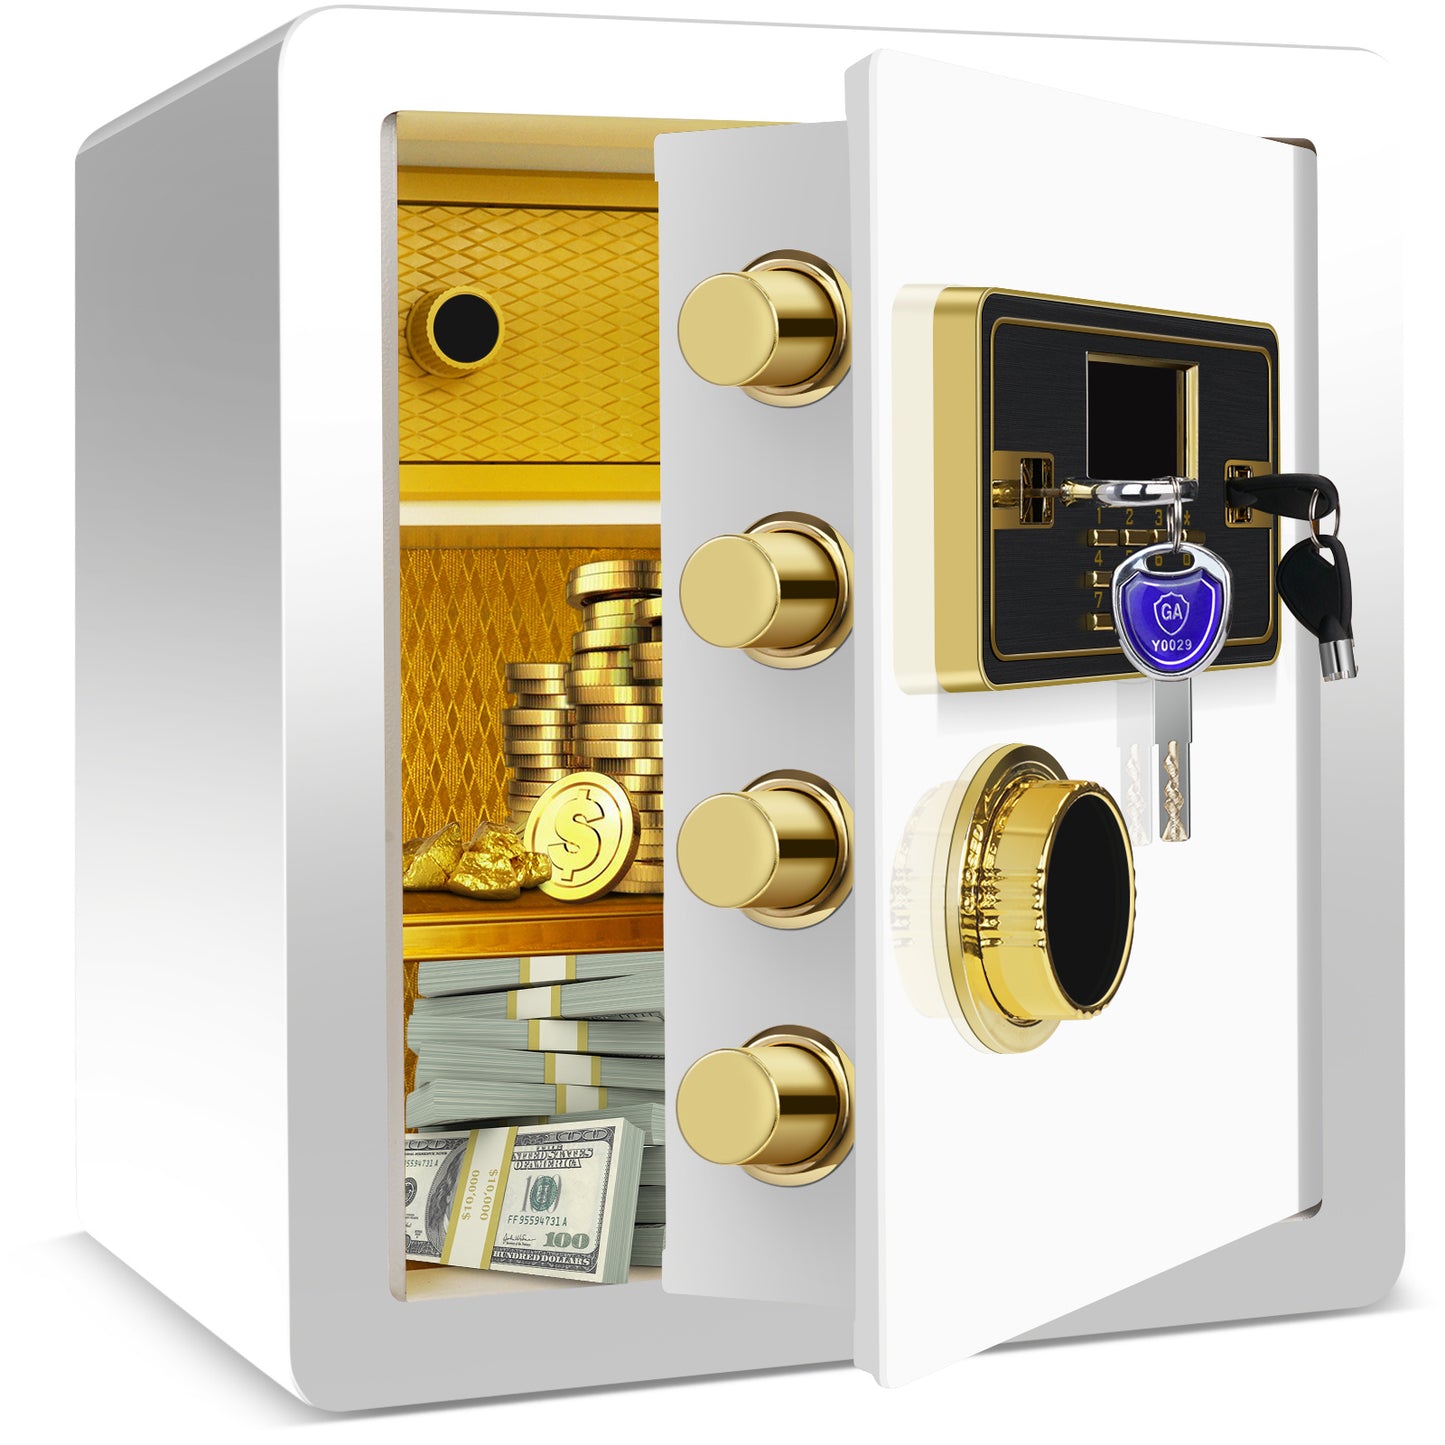 1.93 Cub Safe Box, 3 opening methods Safe for Document Cash Jewelry Pistol Medicine